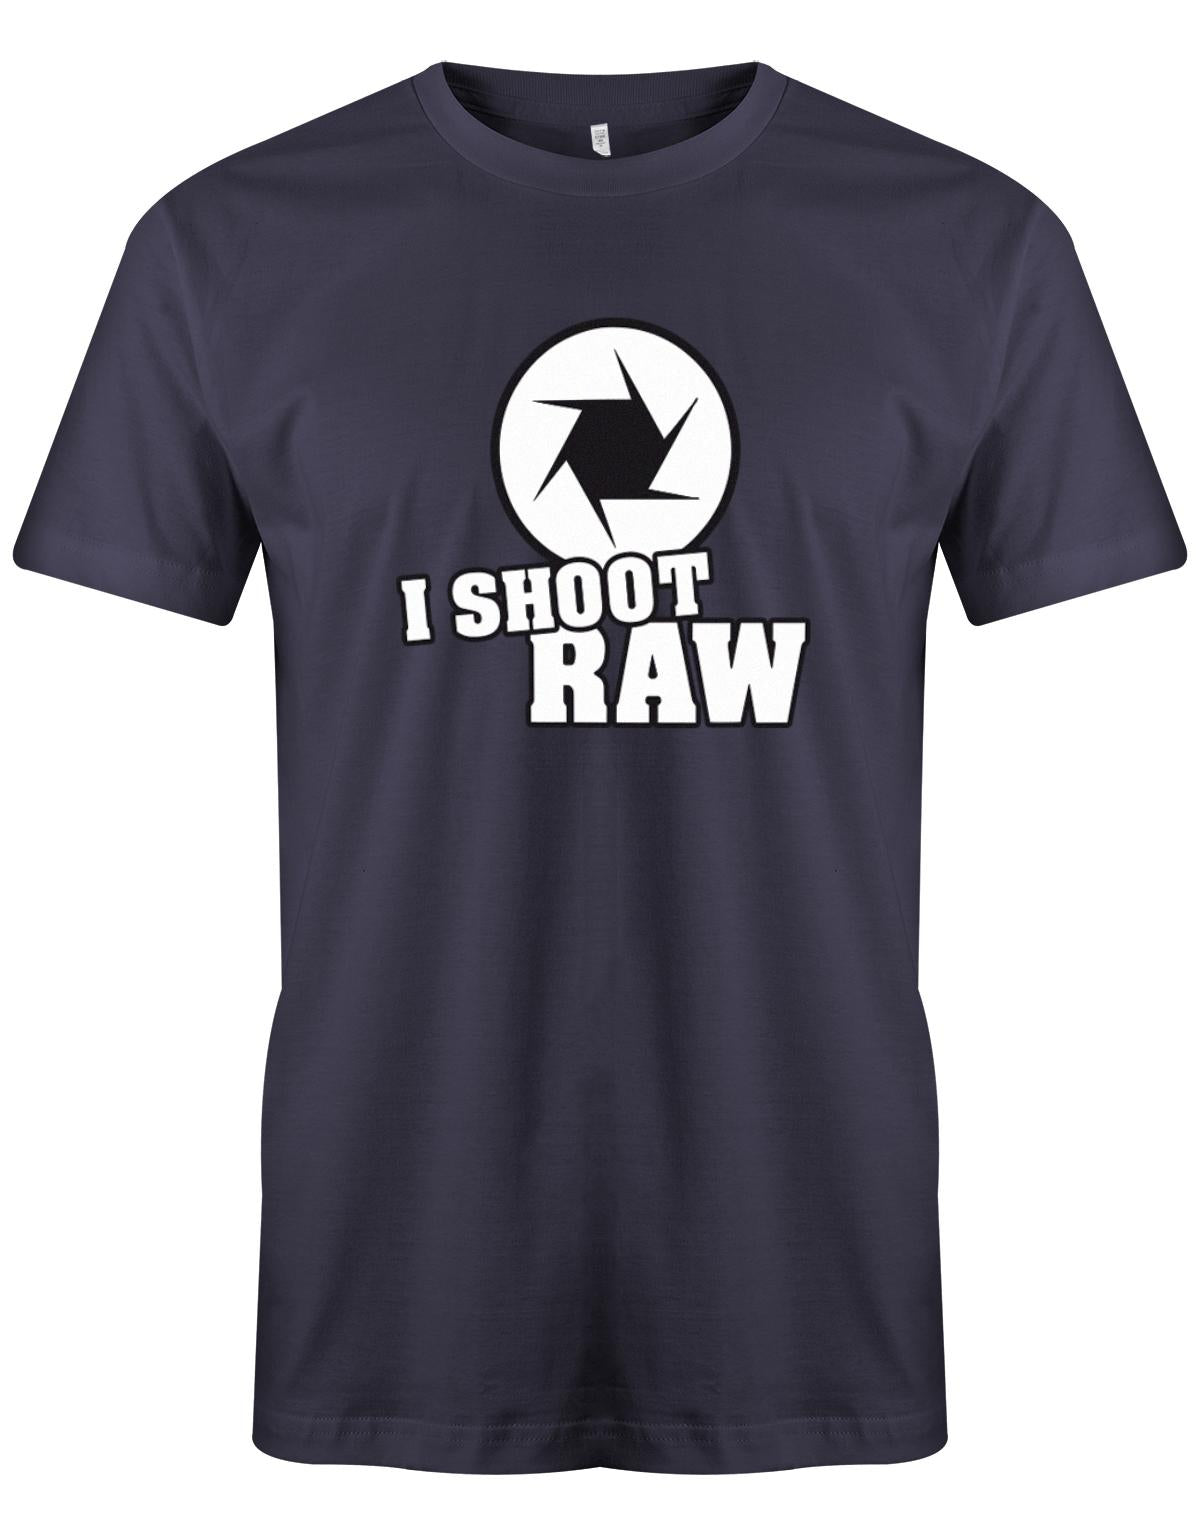 Fotografen Shirt - I Shoot Raw - Fotografen Linse Navy